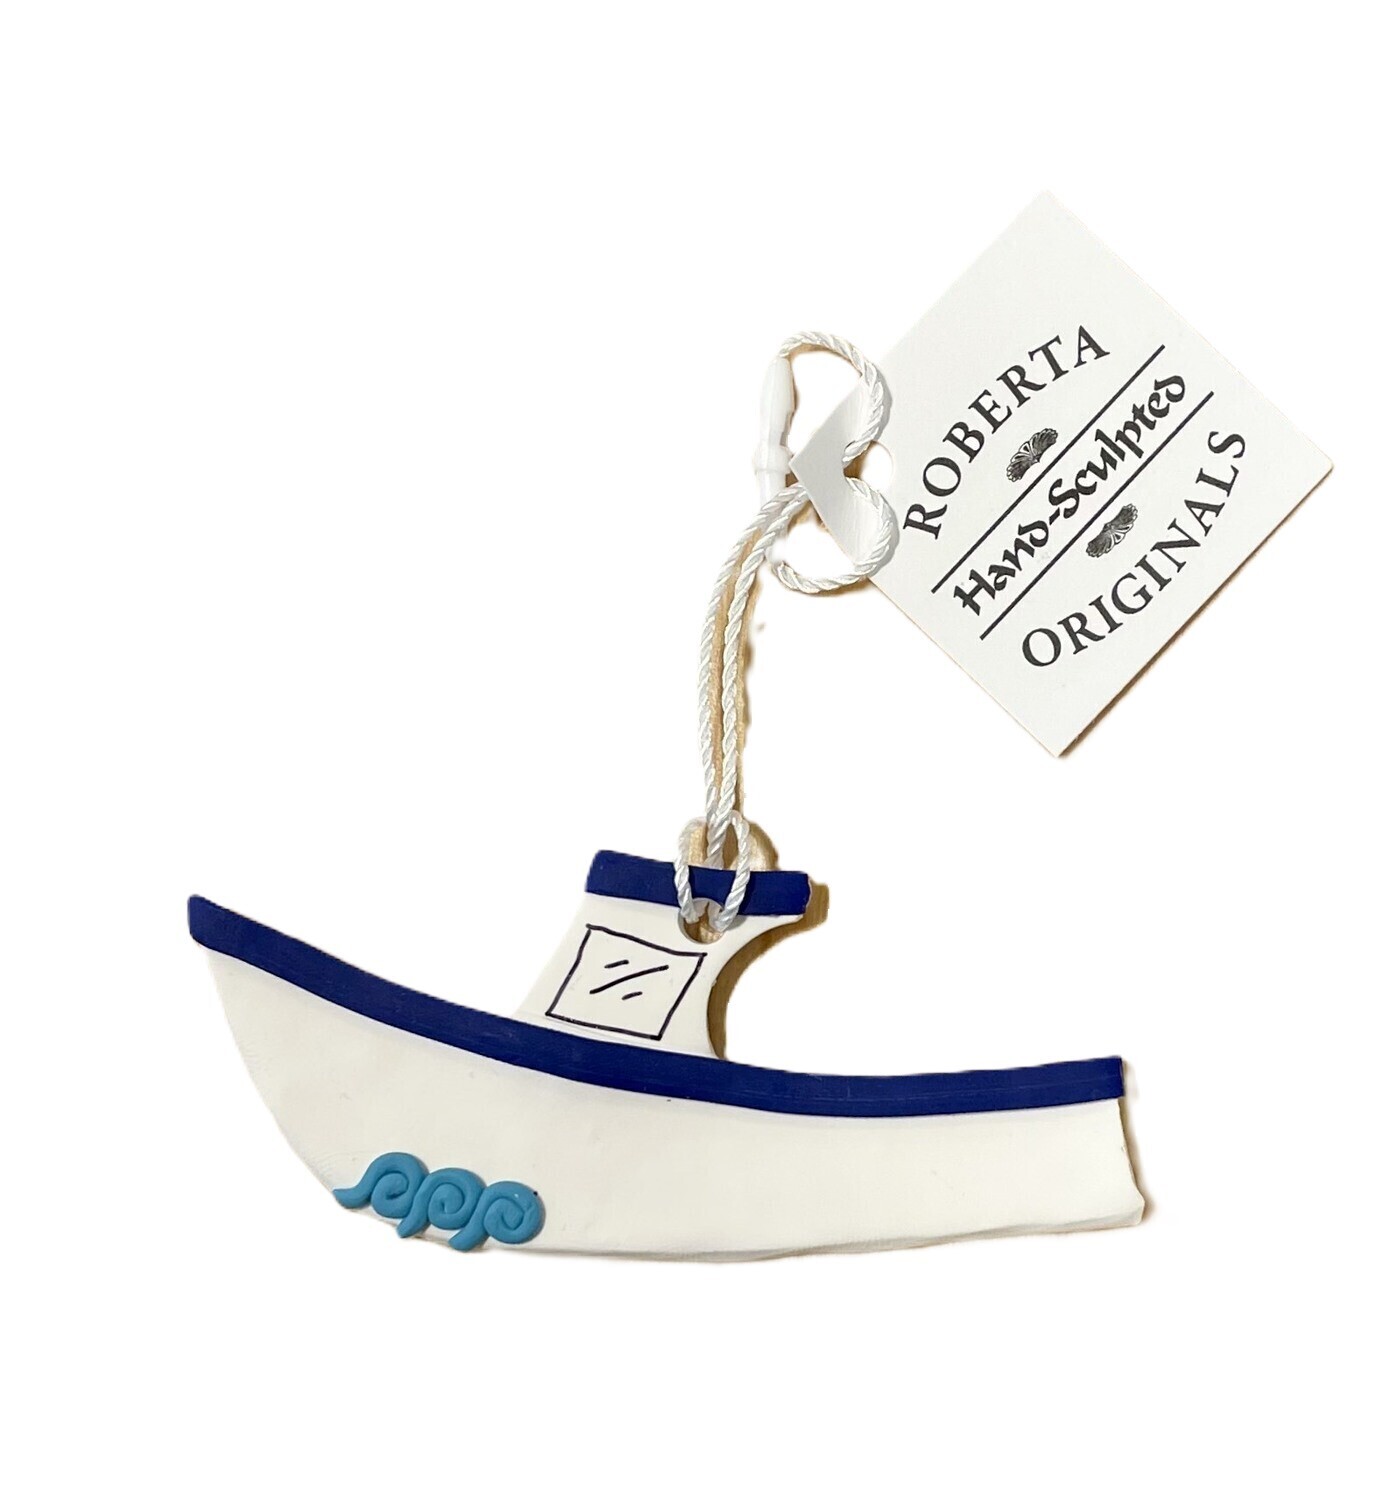 Clay Blue Fishing Boat Ornament